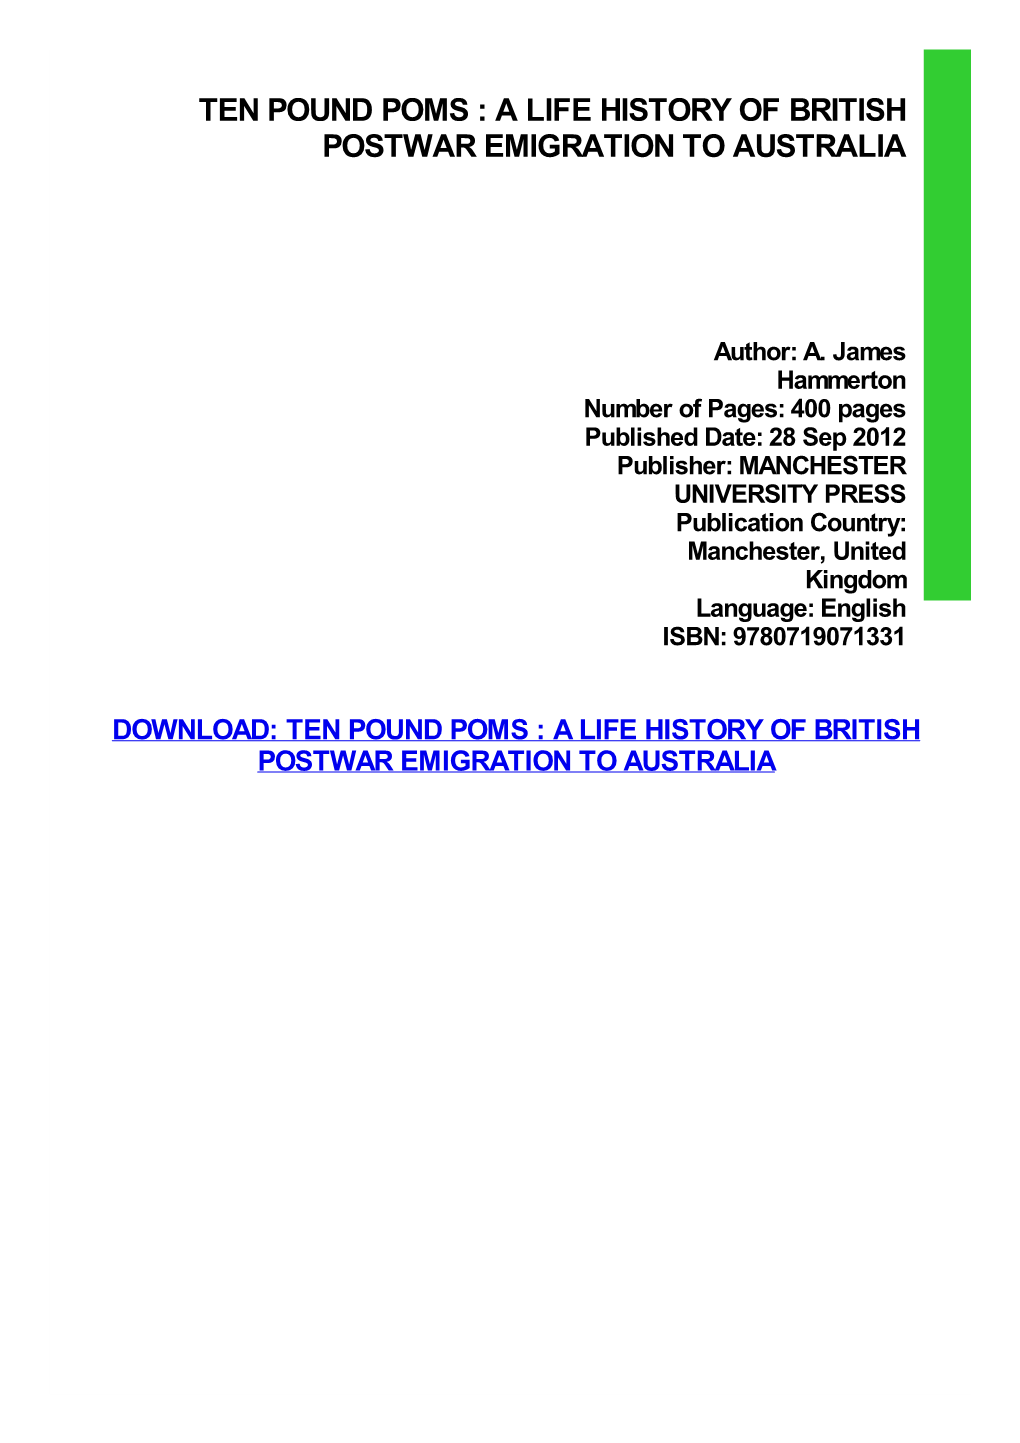 Ten Pound Poms : a Life History of British Postwar Emigration to Australia